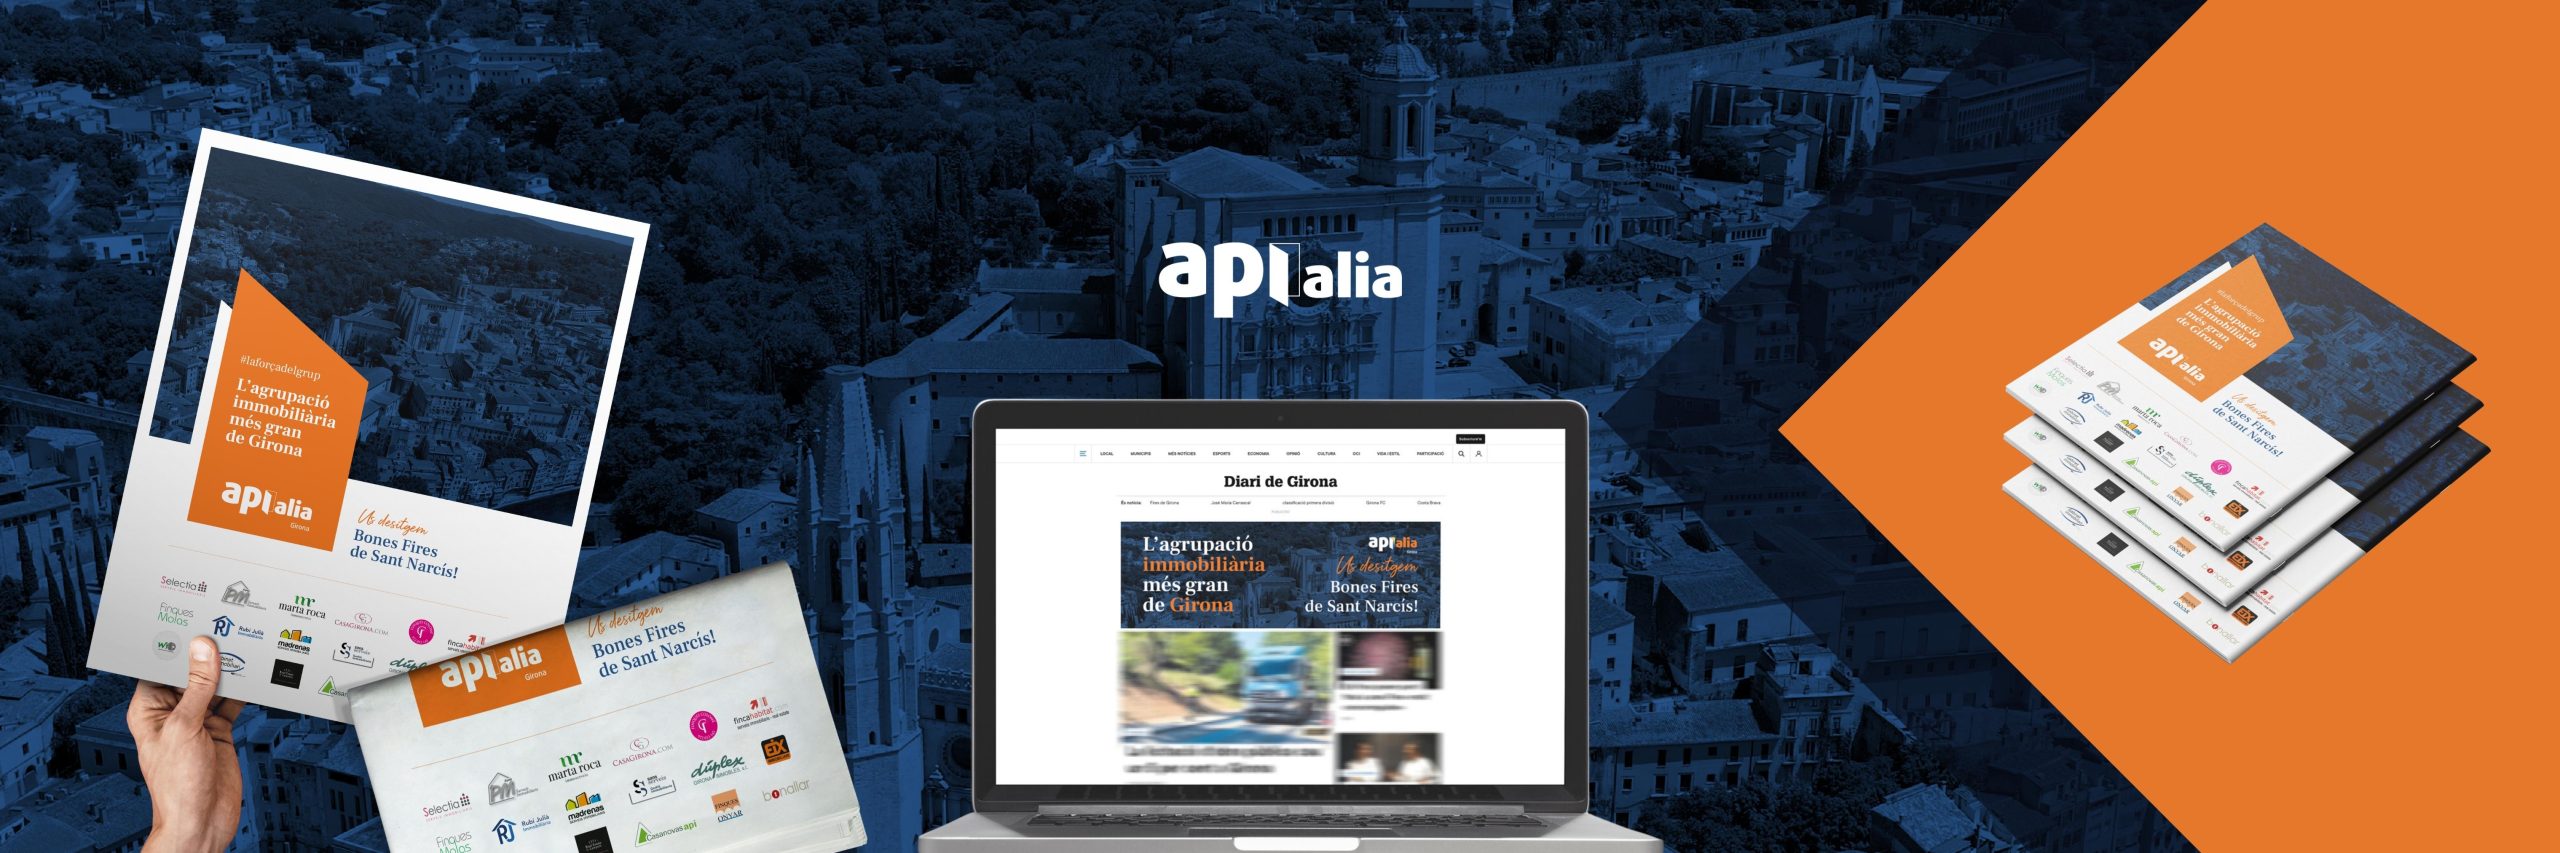 Apialia - Disseny gràfic i publicitari